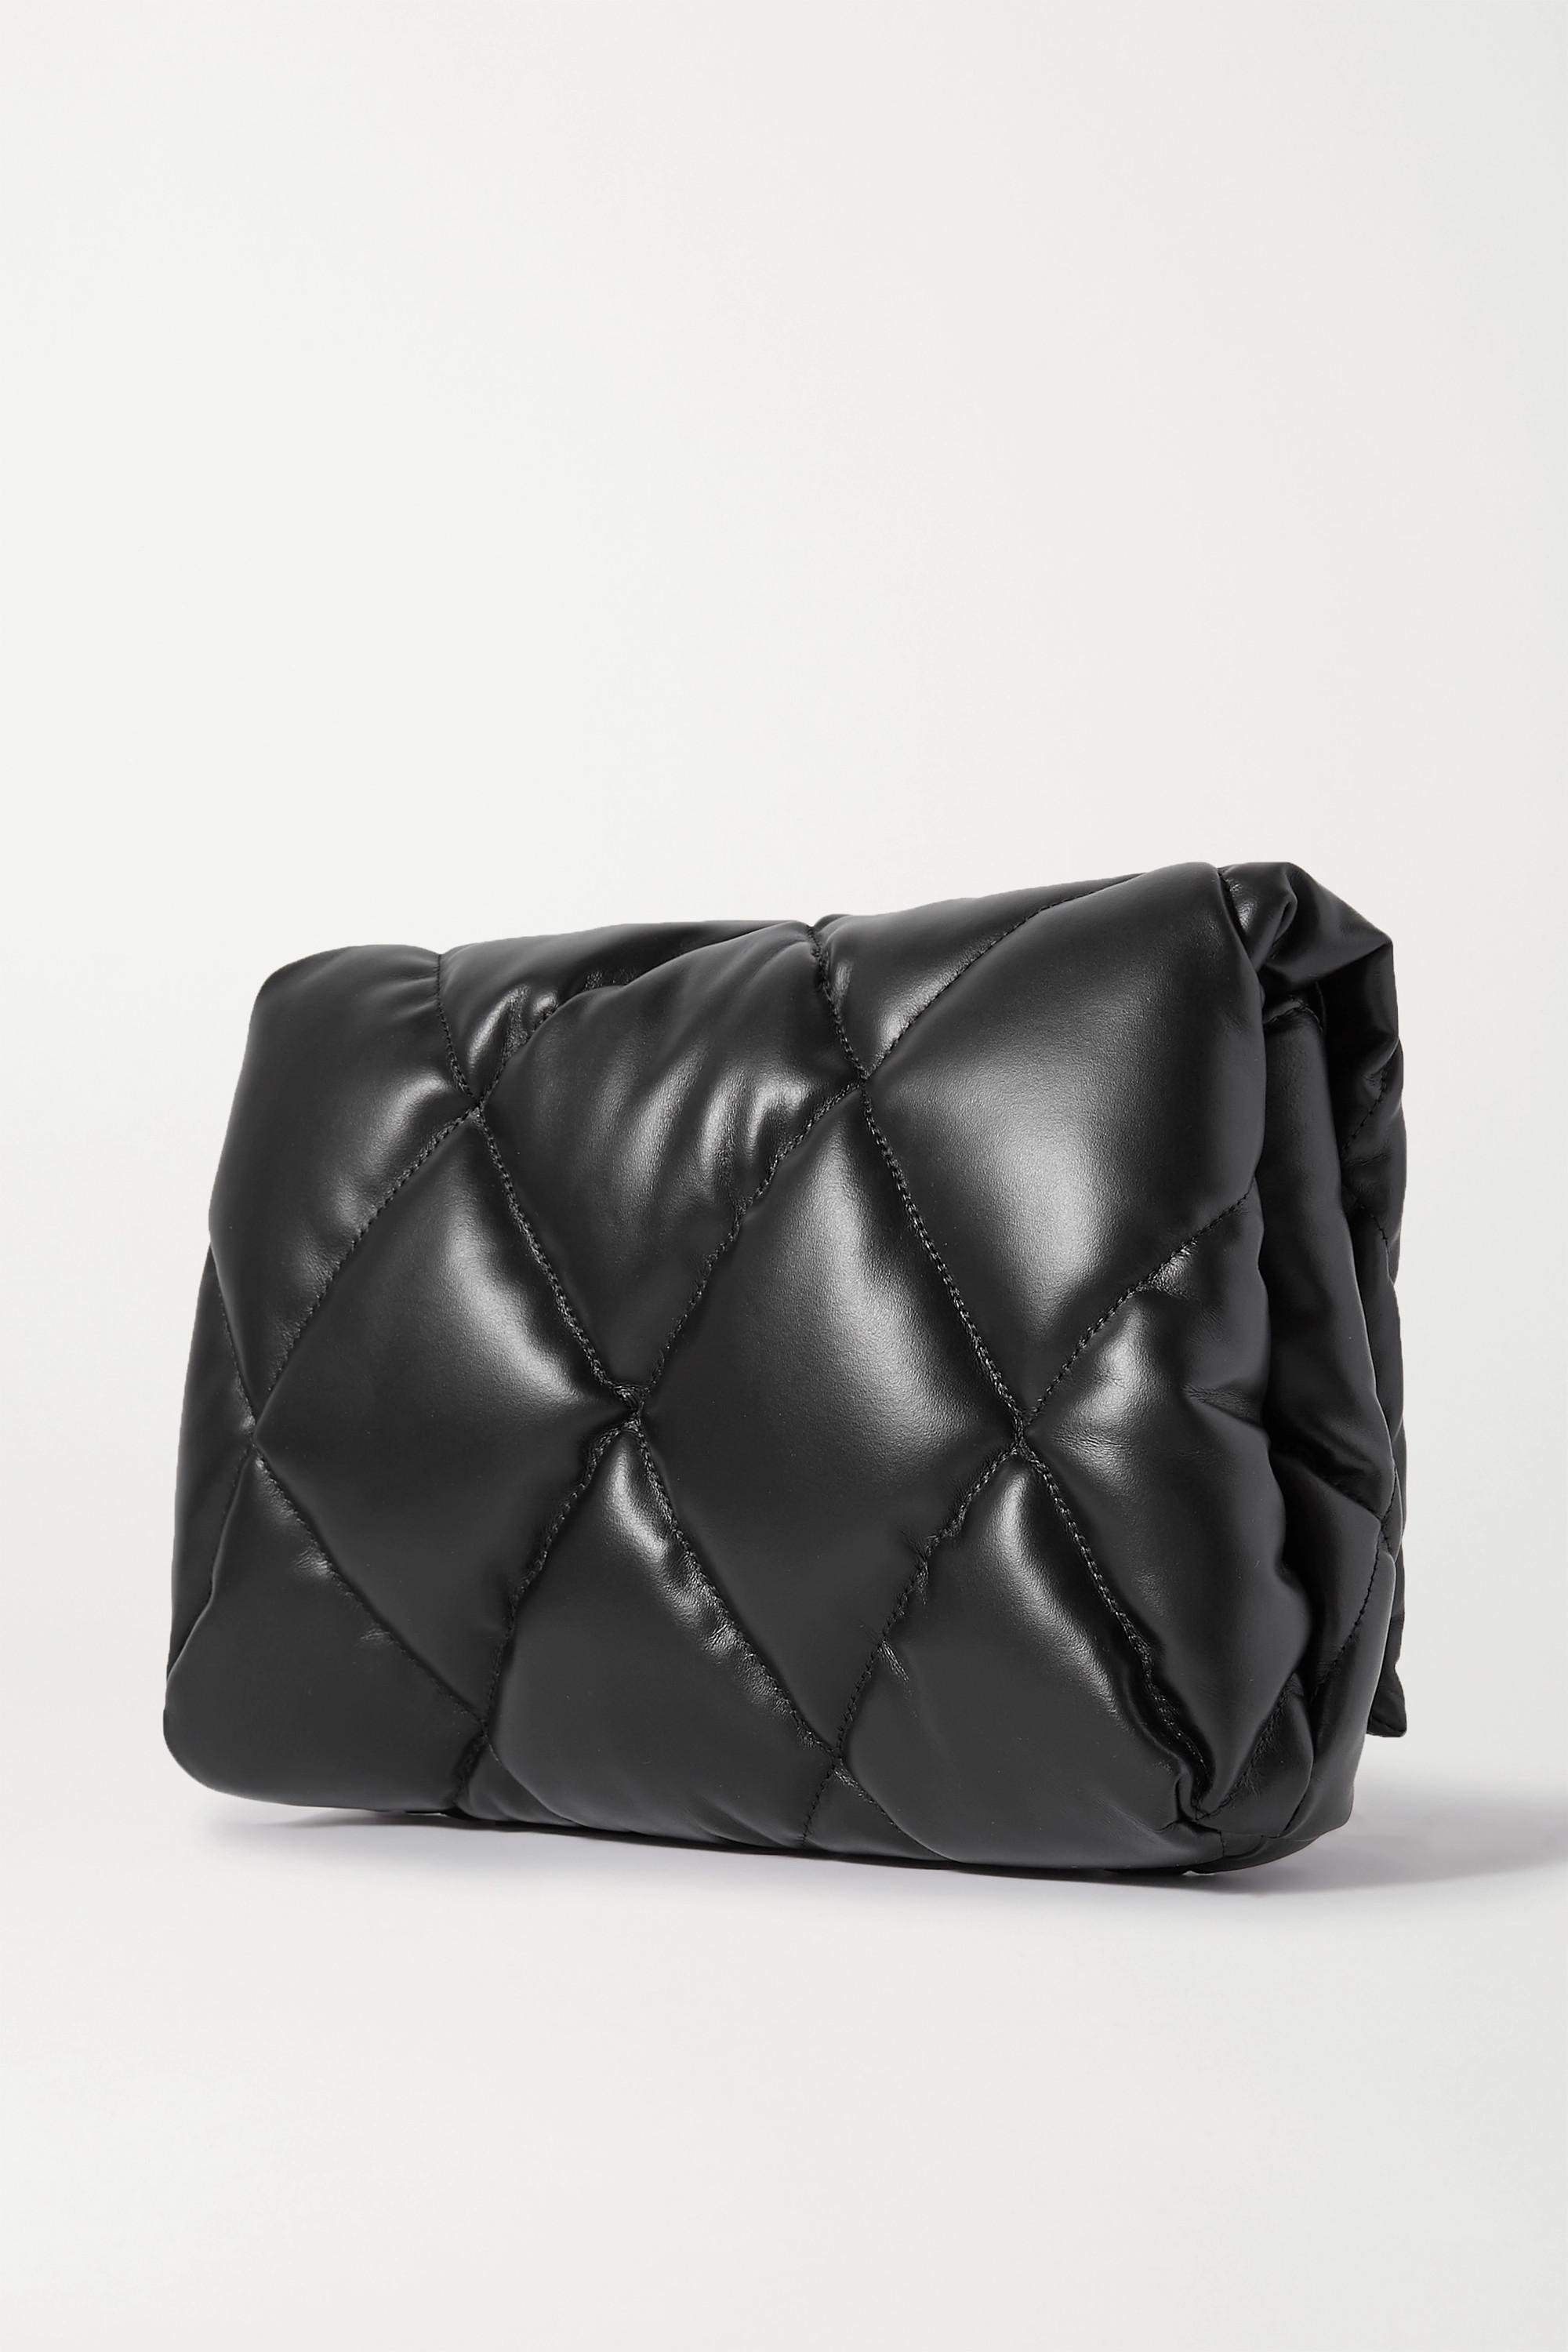 det er nytteløst ordningen podning Balenciaga Touch Puffy Embellished Quilted Leather Clutch in Black | Lyst